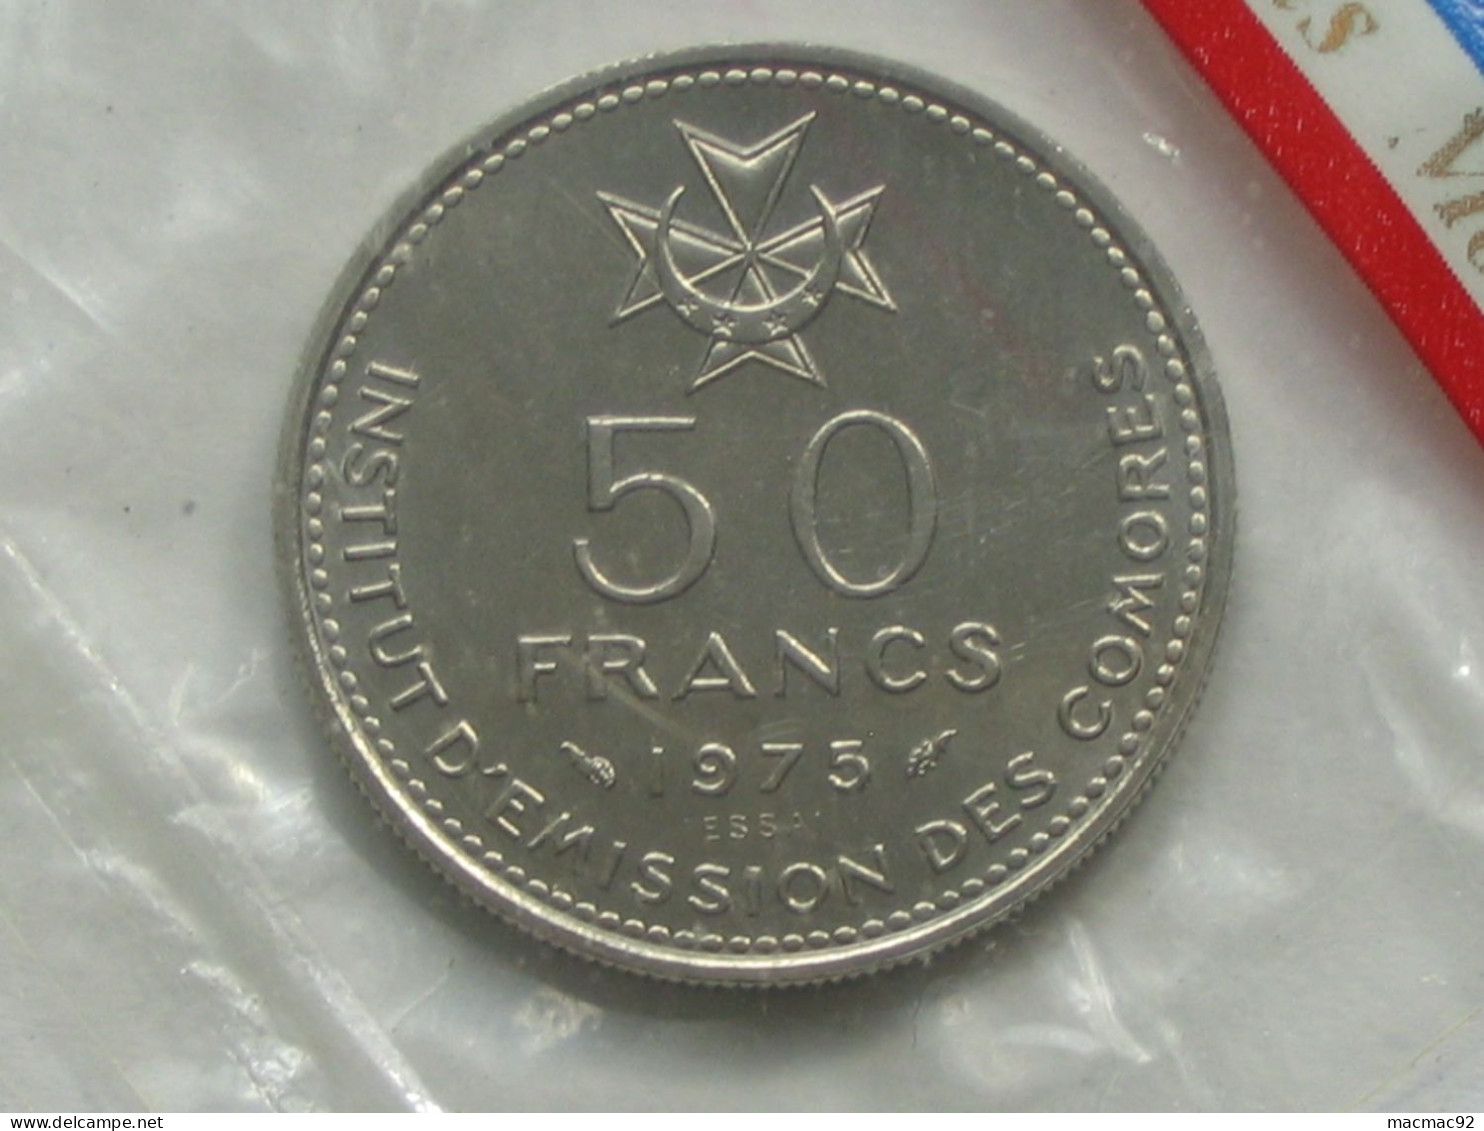 COMORES - RARE Essai  De La 50 Francs 1975 - Institut D'émission Des Comores **** EN ACHAT IMMEDIAT **** - Comoren